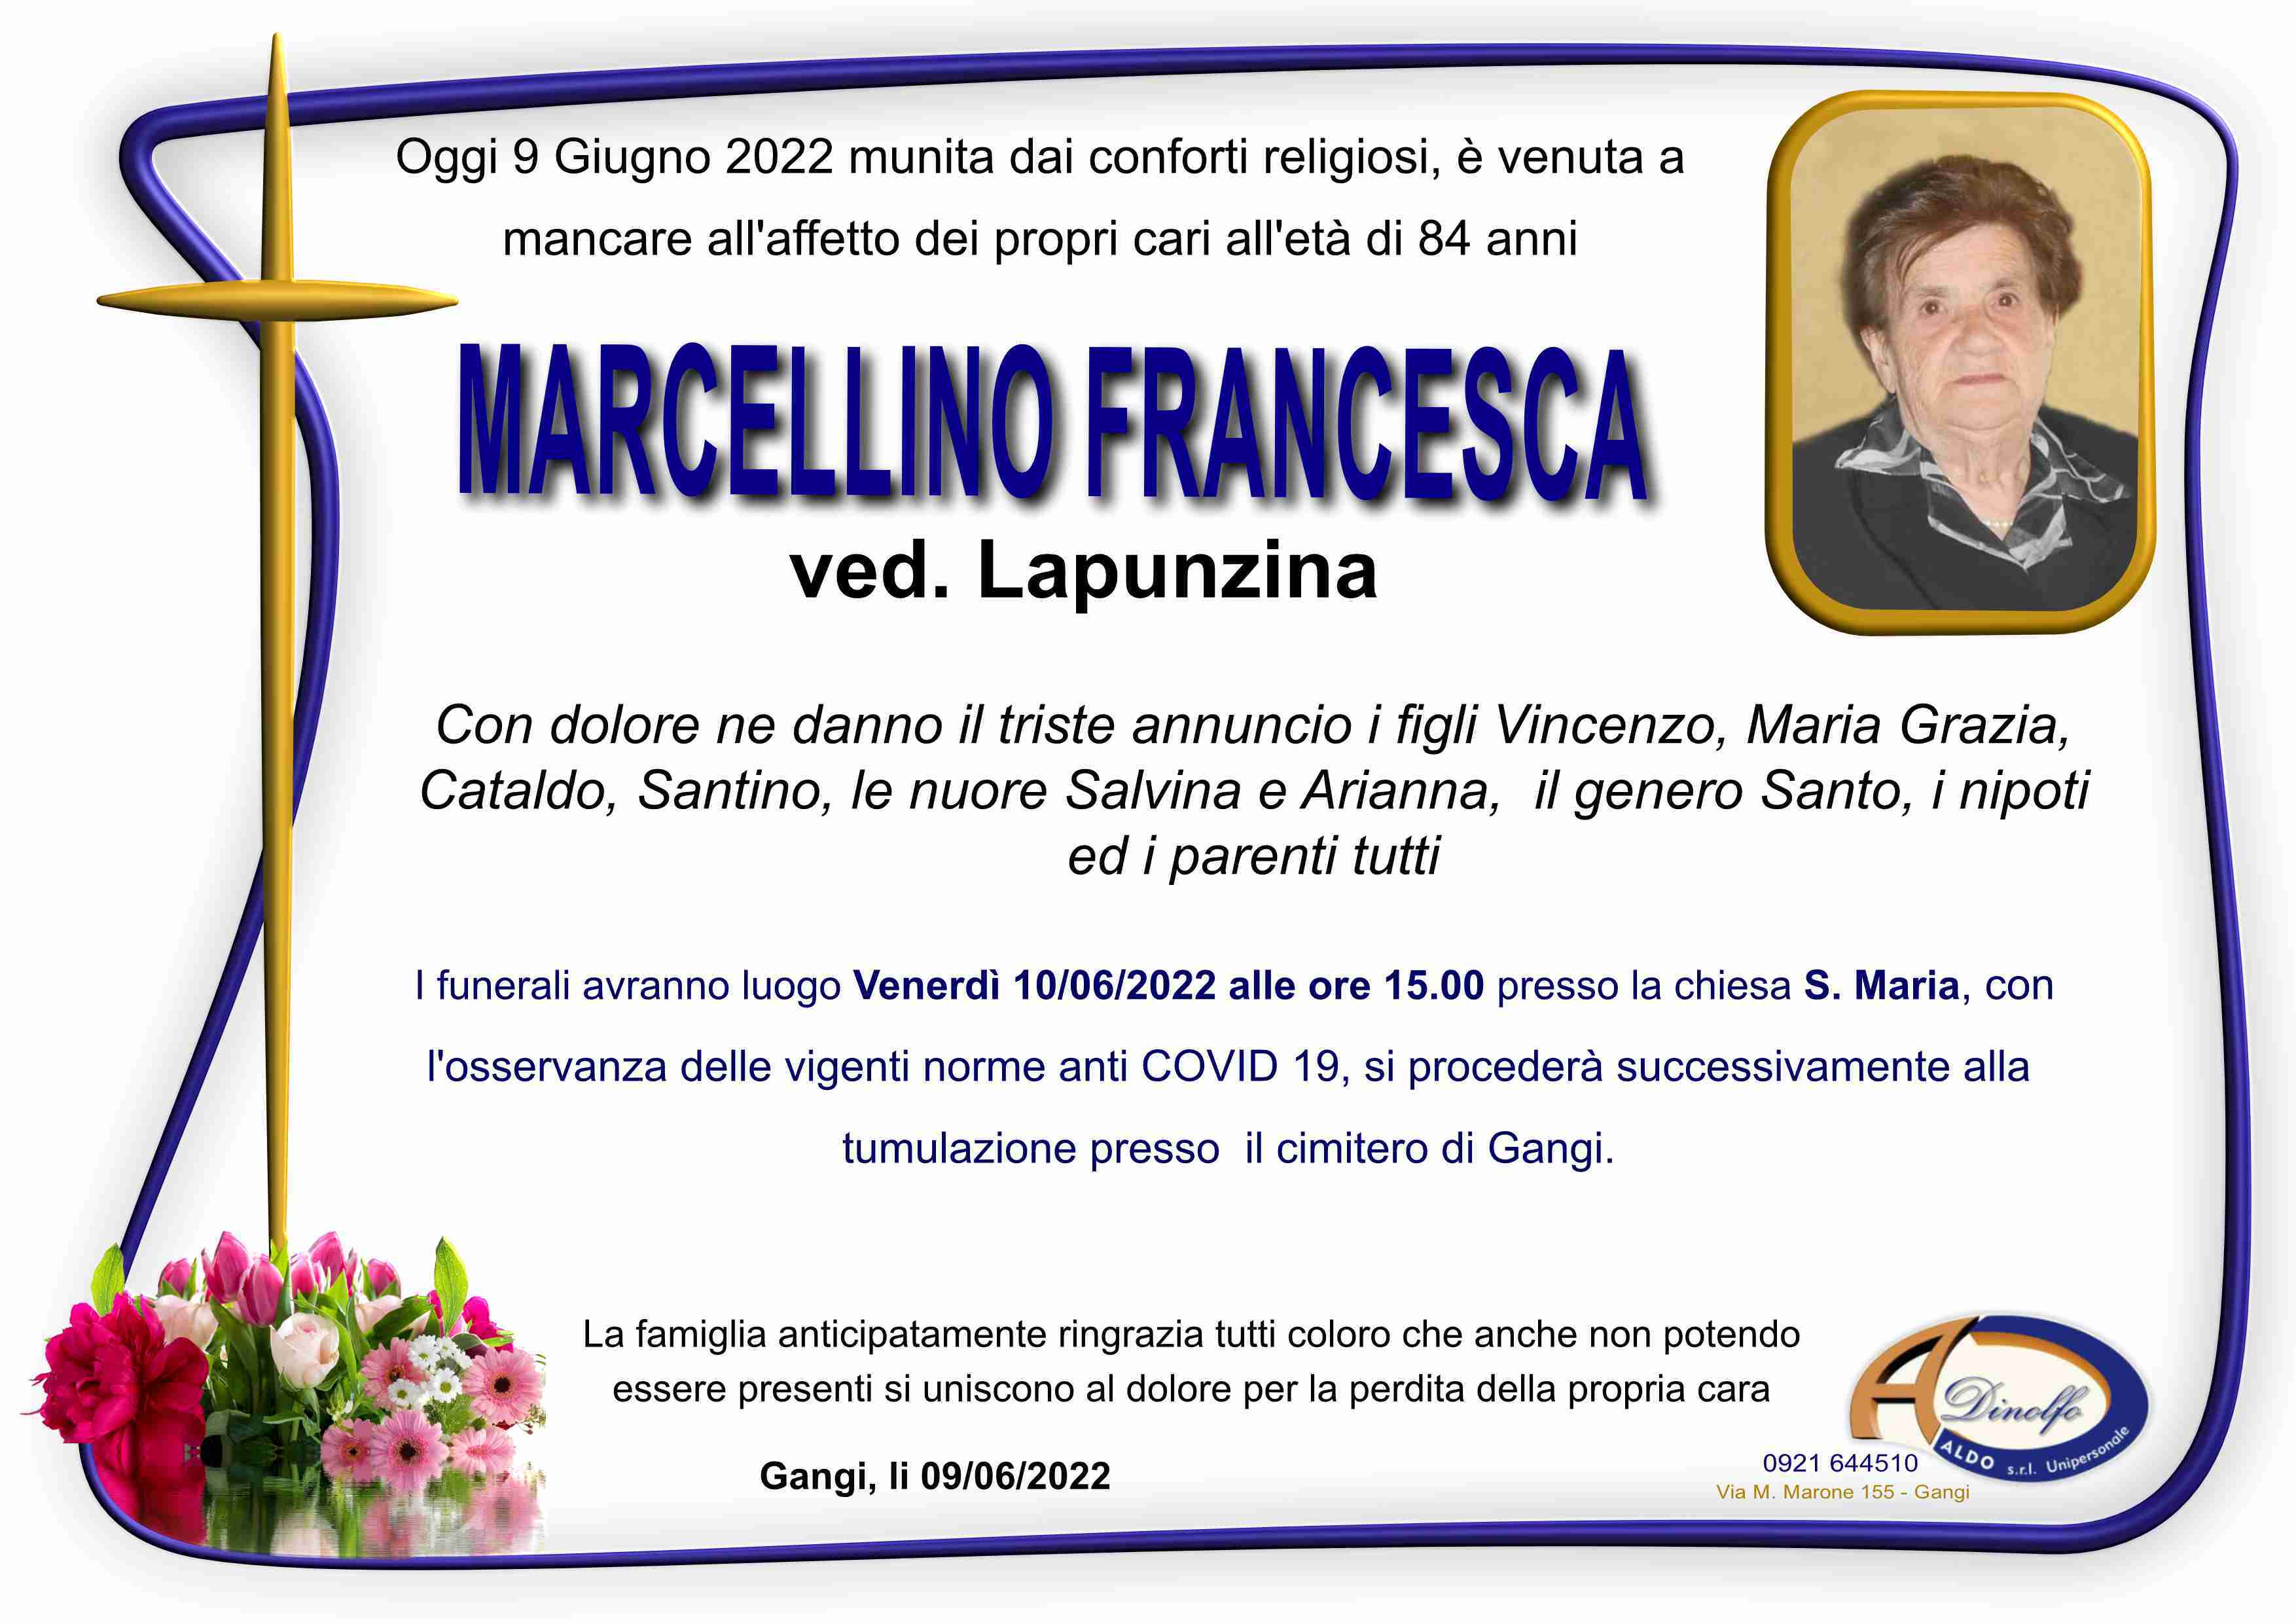 Francesca Marcellino